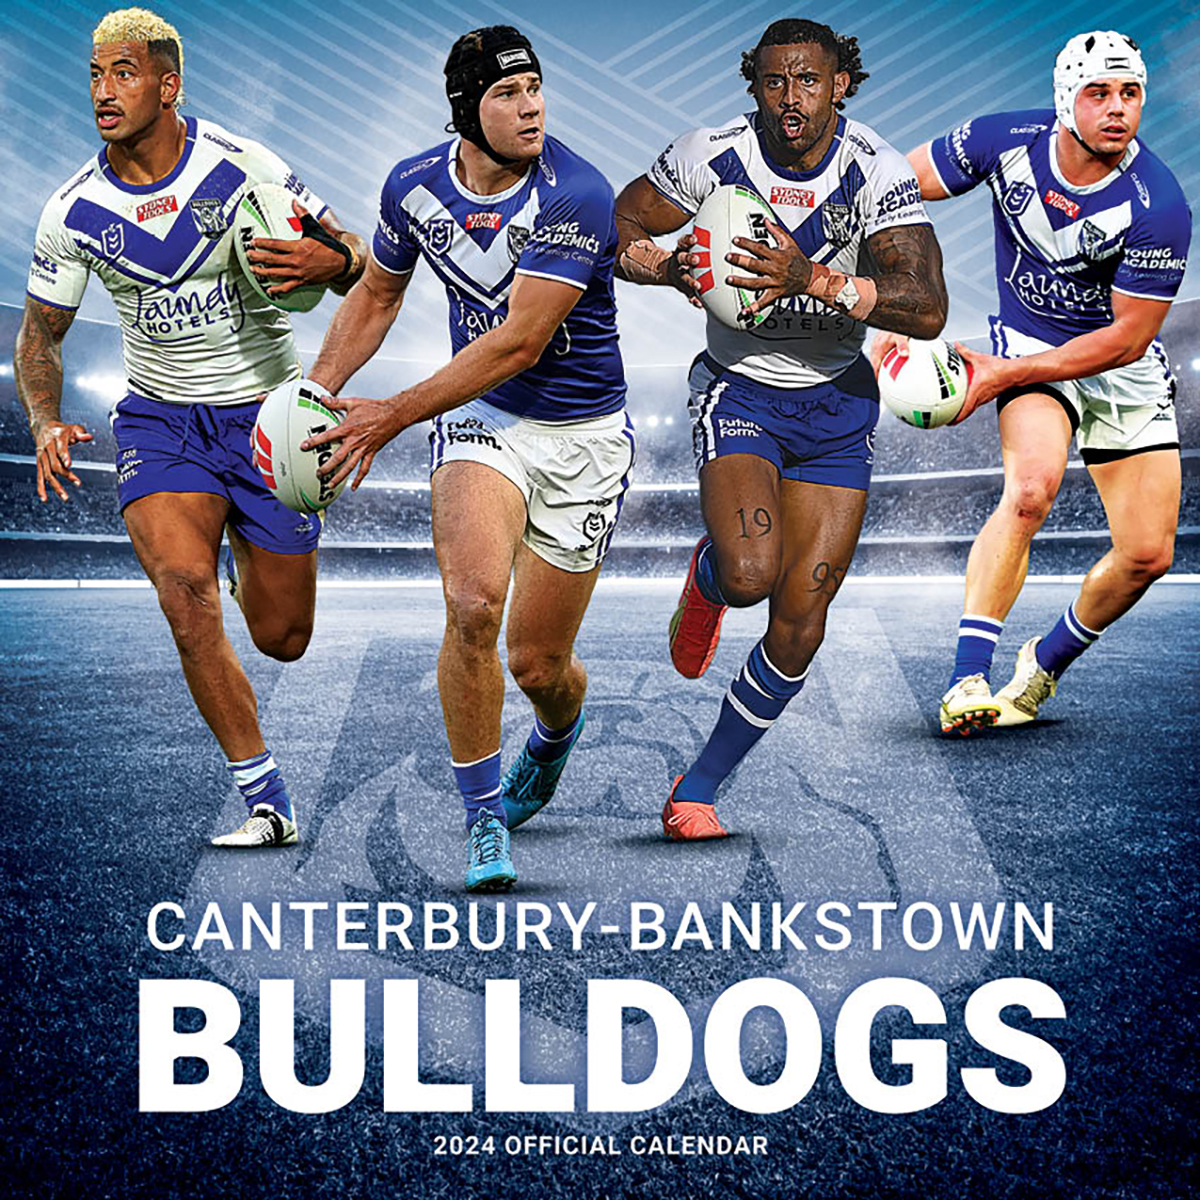 NRL Canterbury Bulldogs Official NRL 2019 Wall Calendar NEW by Paper Pocket